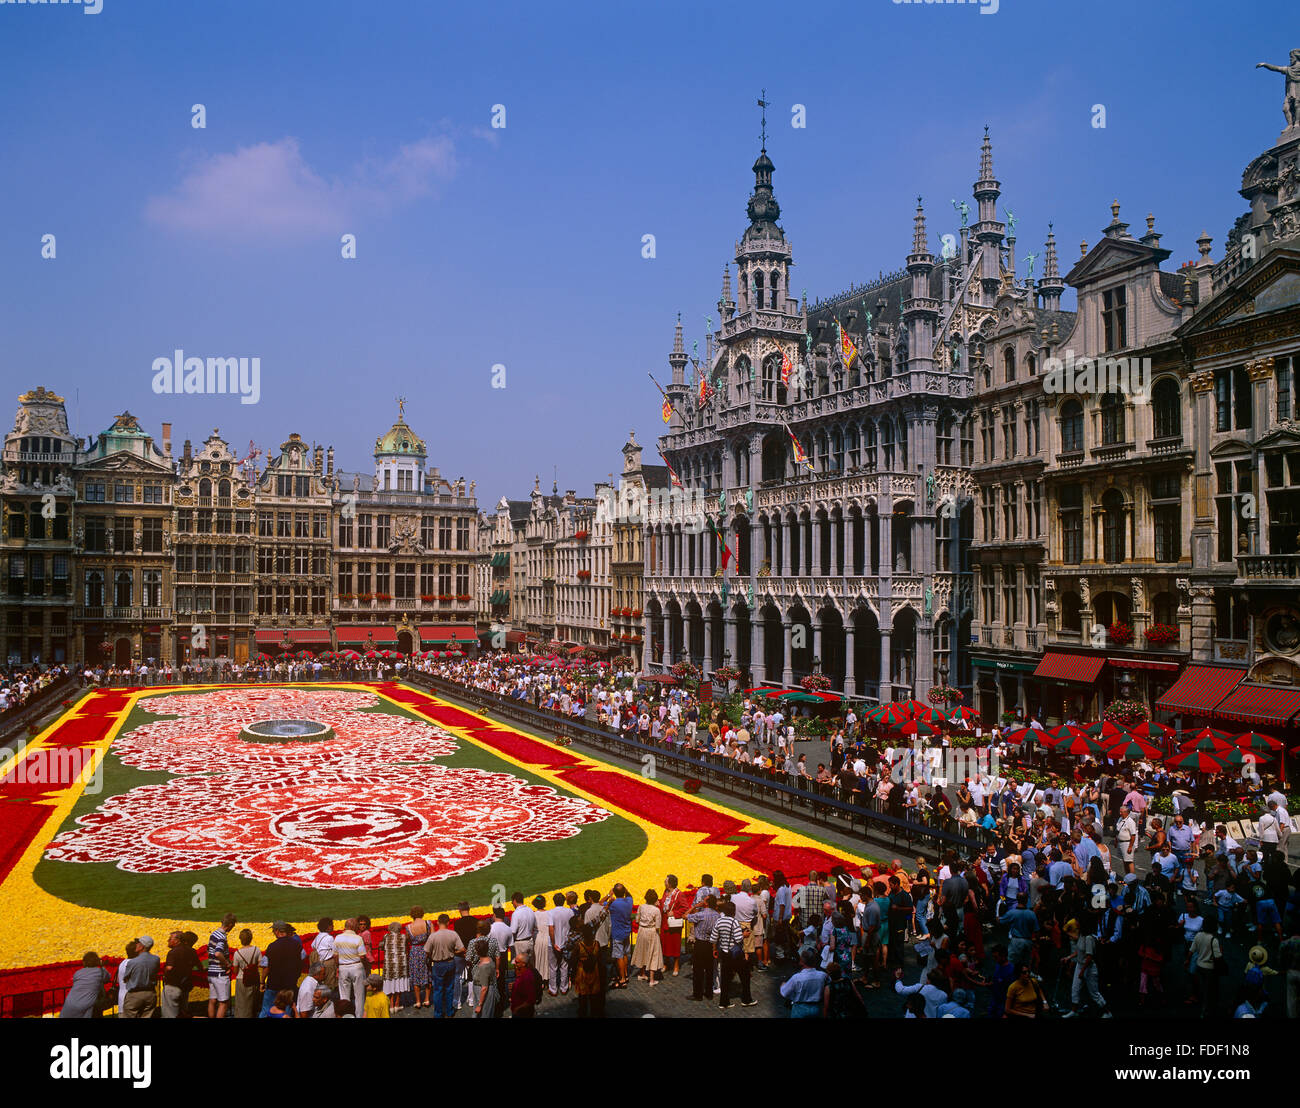 Alfombra de Flores en la Grand Place, Bruselas, Bélgica Foto de stock